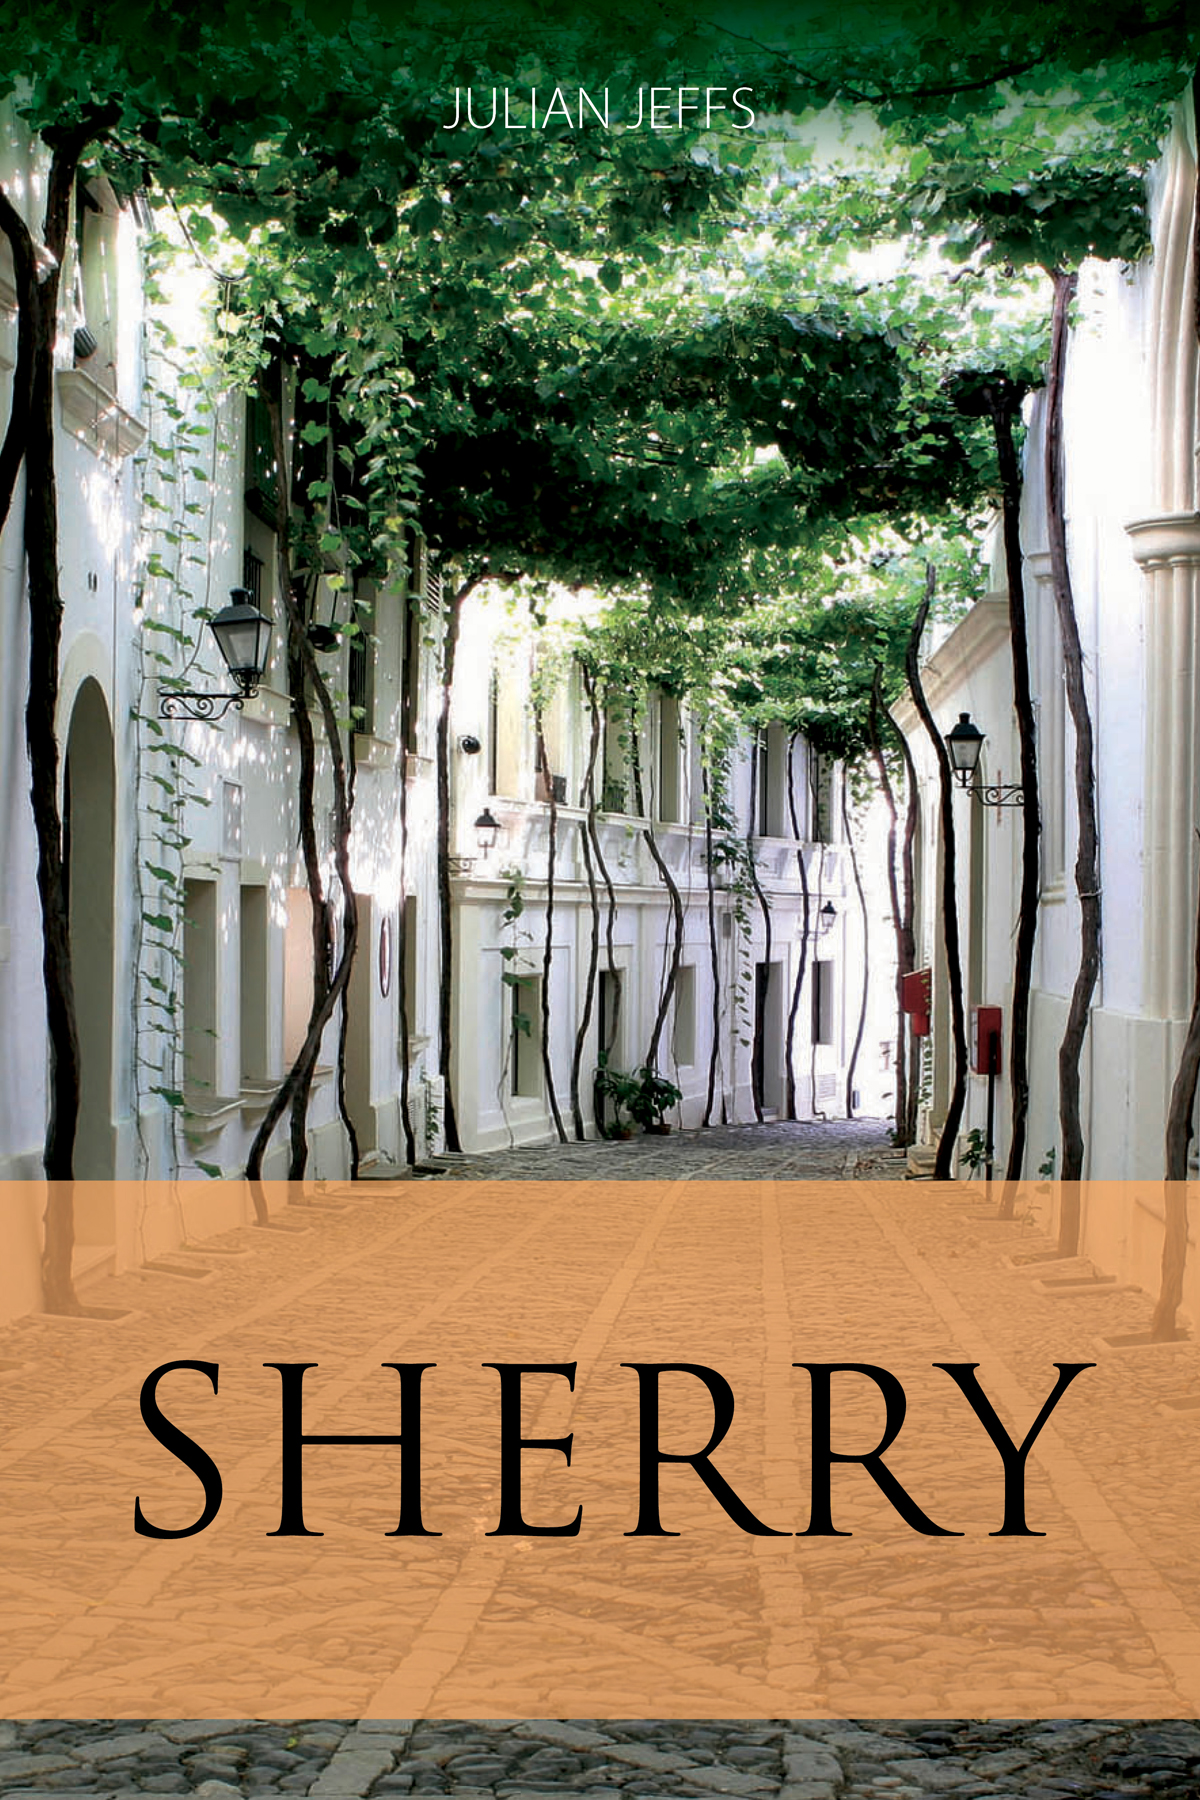 Extract: Sherry by Julian Jeffs